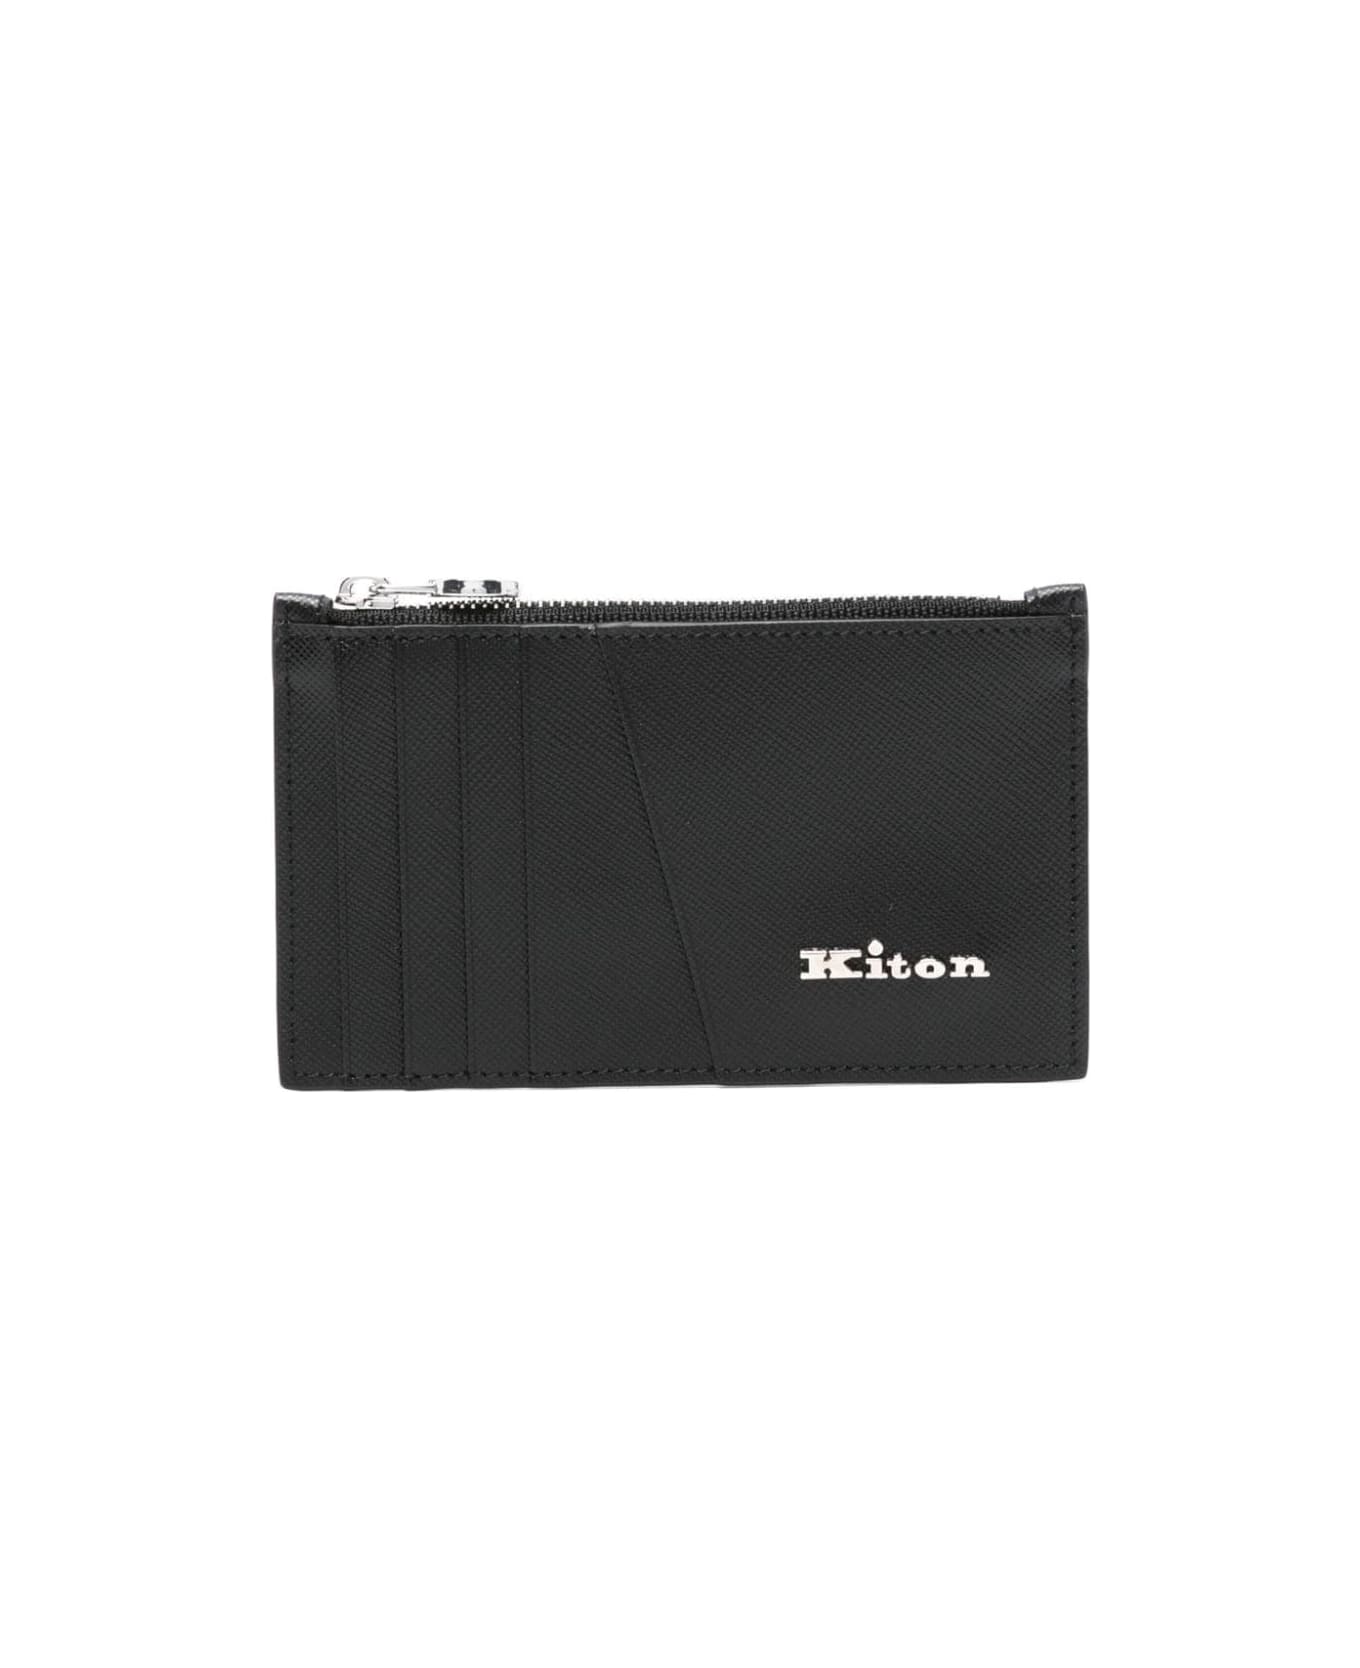 Kiton Black Leather Card Holder With Logo - Black